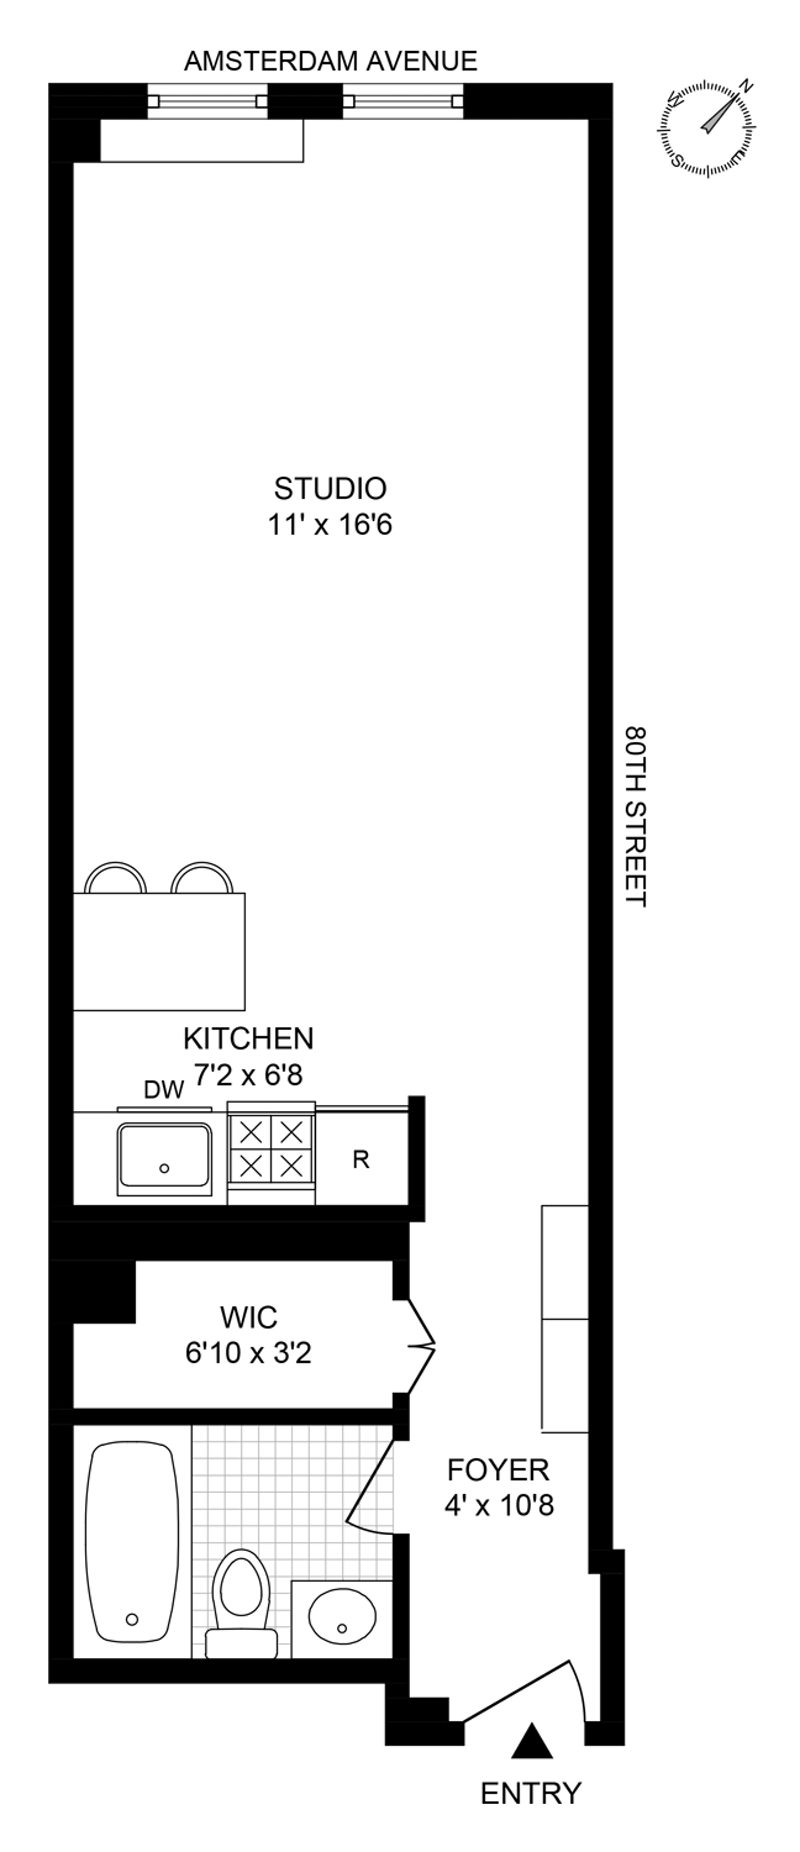 Floorplan for 186 West 80th Street, 5D